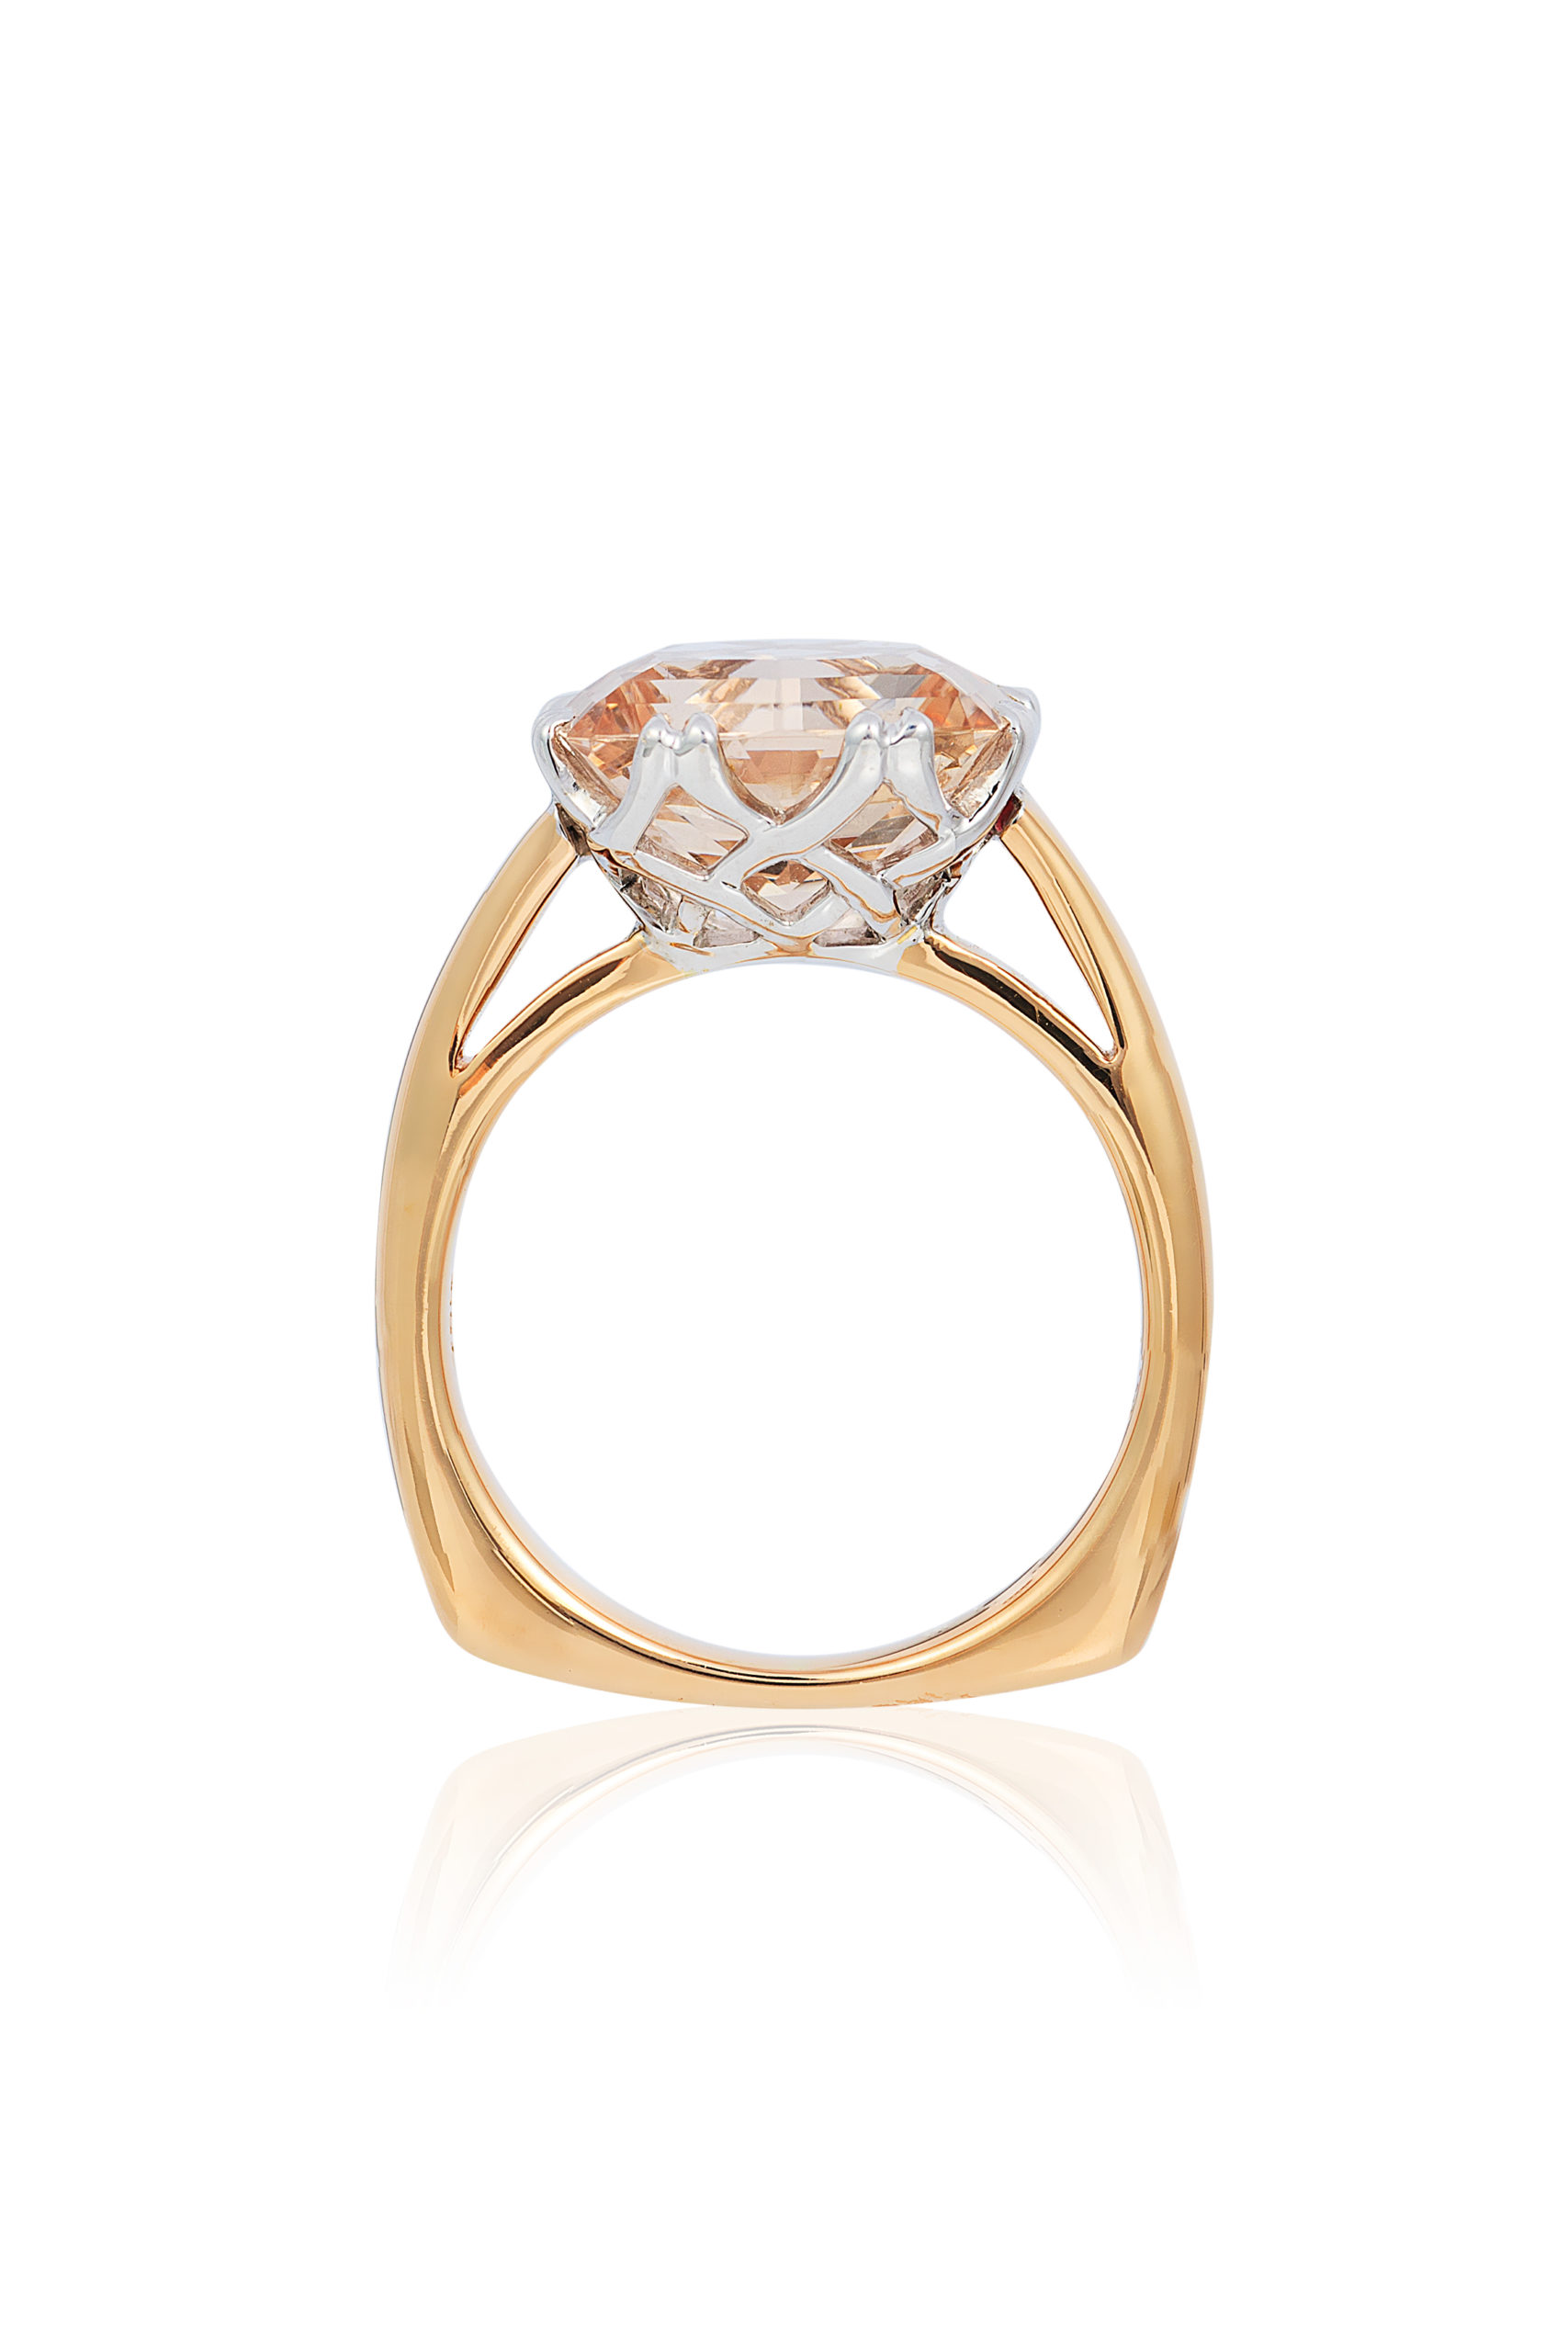 cynthia-renee-custom-jewelry-design-peach-topaz-trellis-gold-ring